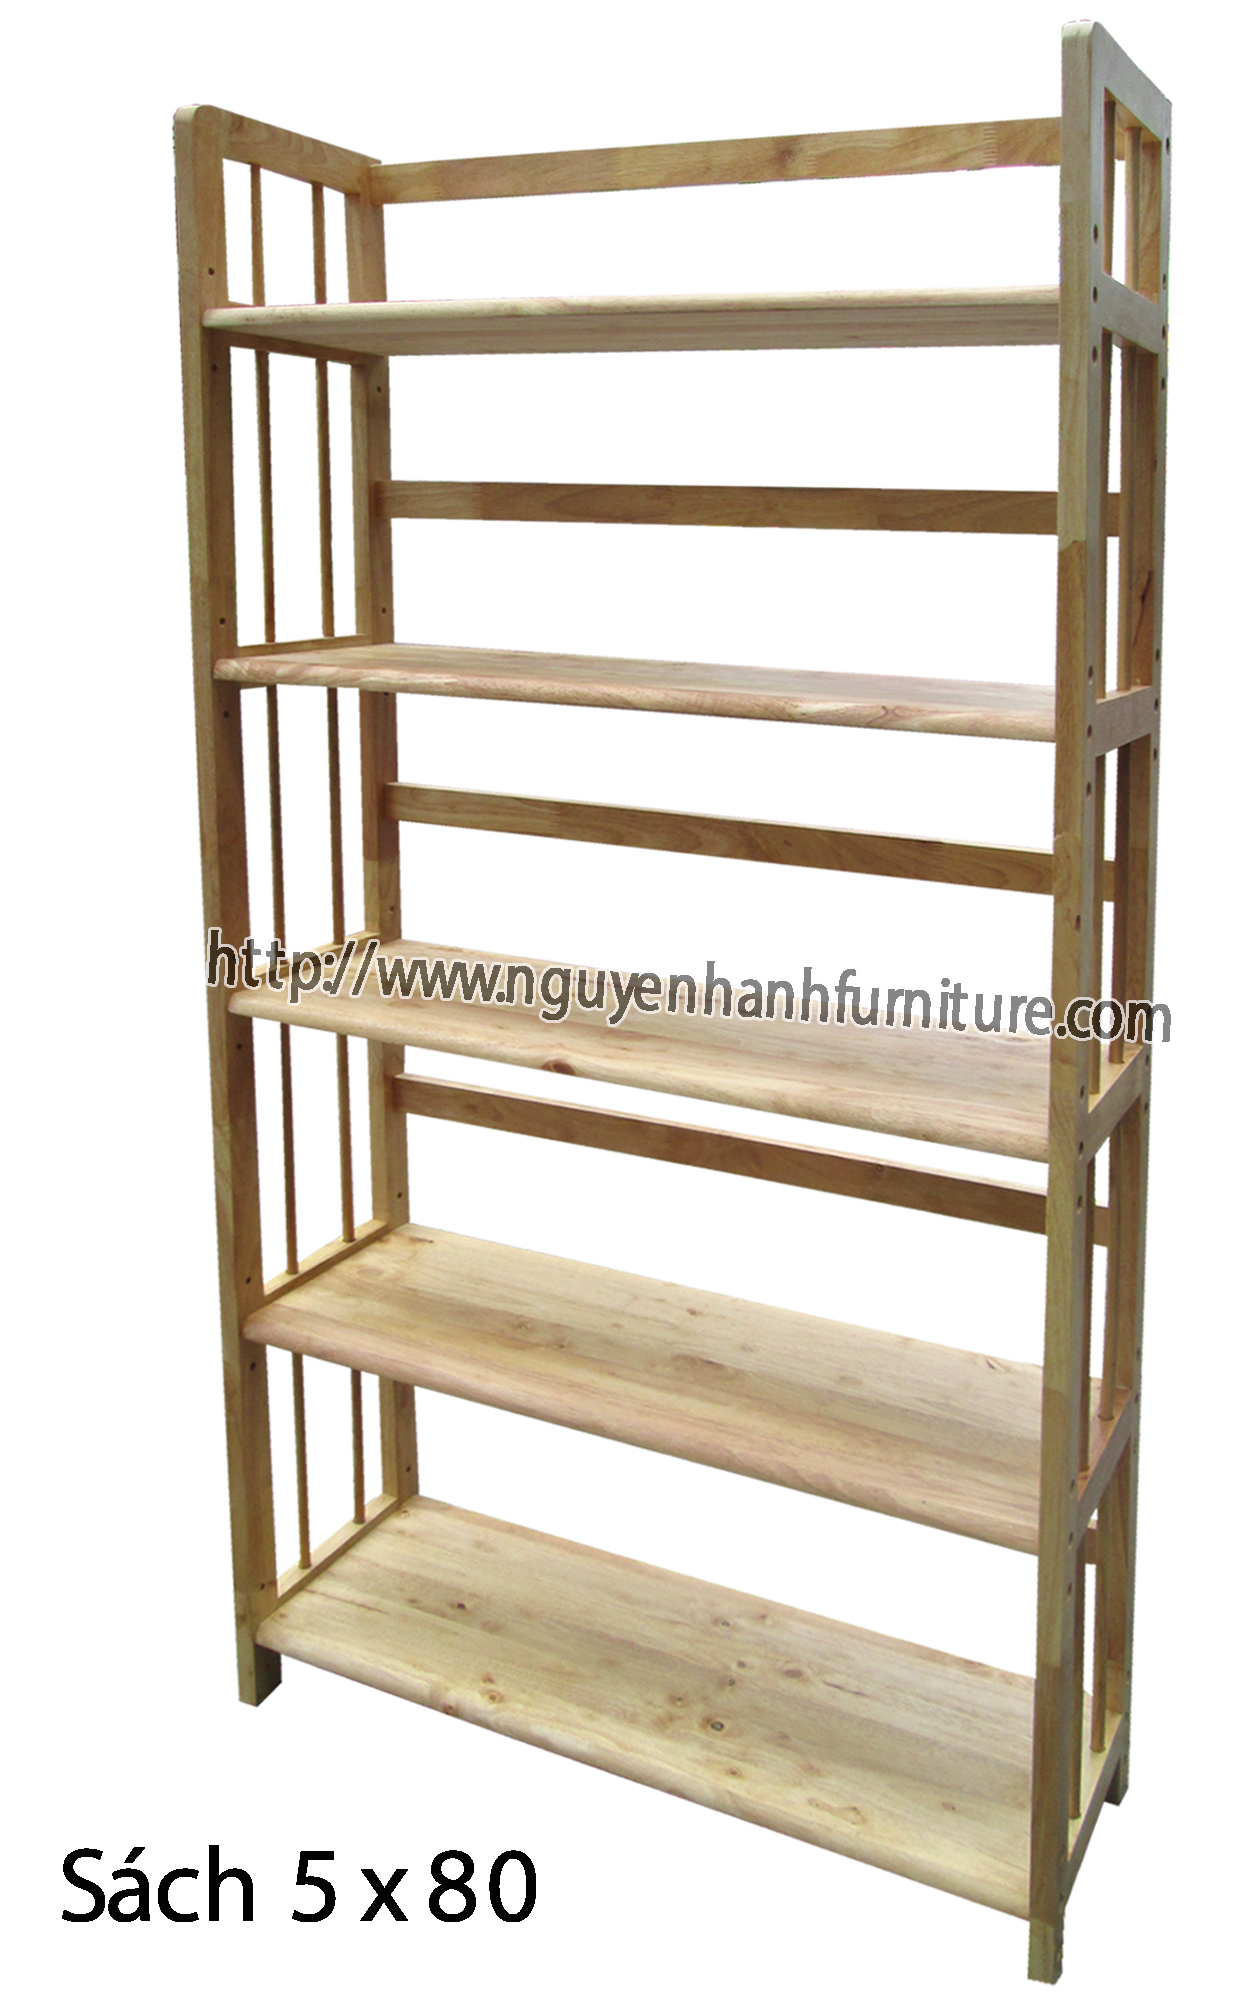 Name product: 5 storey Adjustable Bookshelf 80 (Yellow) - Dimensions: 80 x 28 x 157 (H) - Description: Wood natural rubber